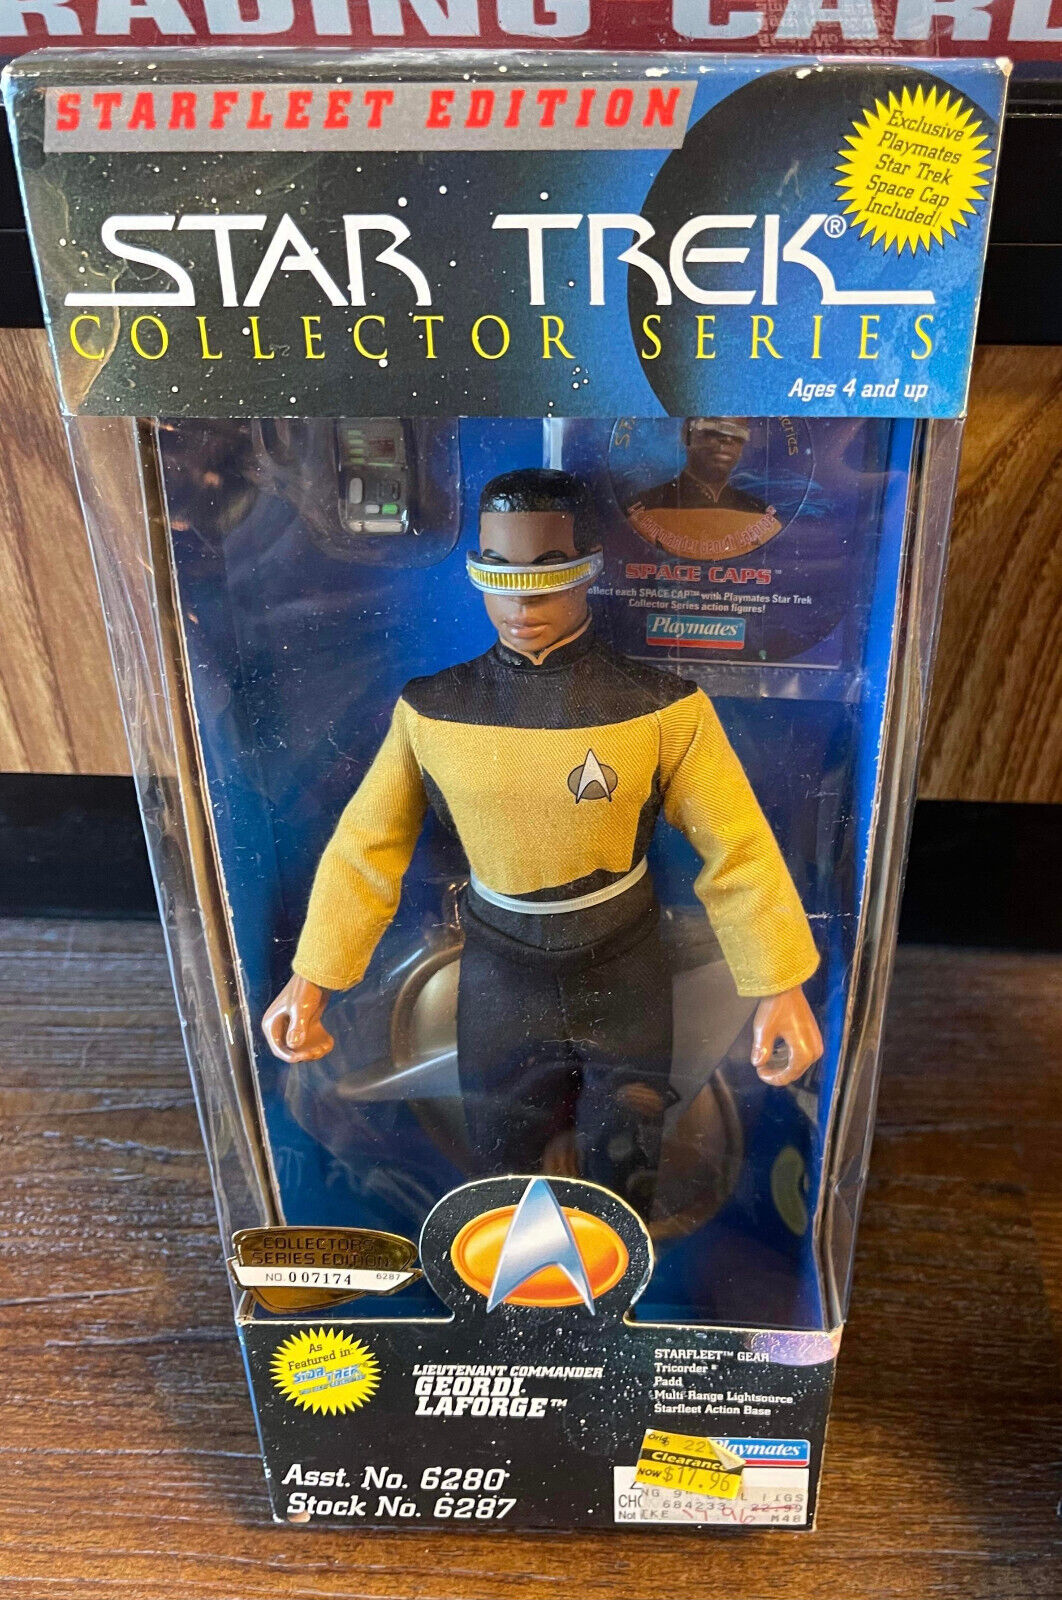 Star Trek Collector Series, Lt. Commander Geordi LaForge - Playmates 1995